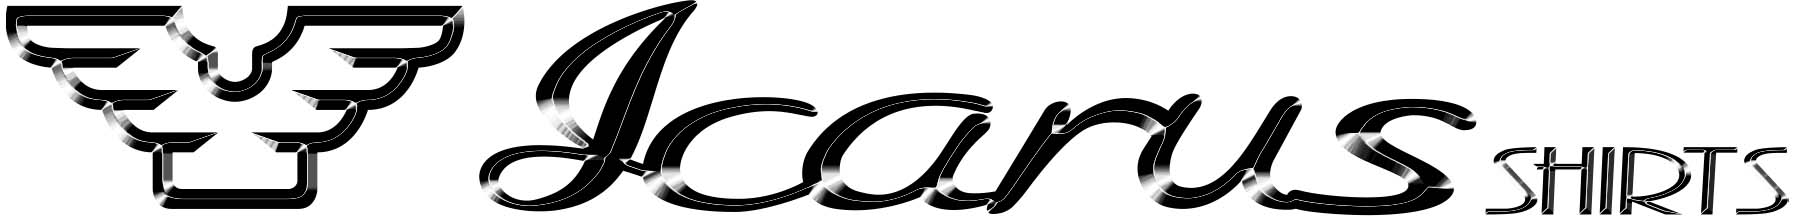 Icarus Logo - Chrome - Long